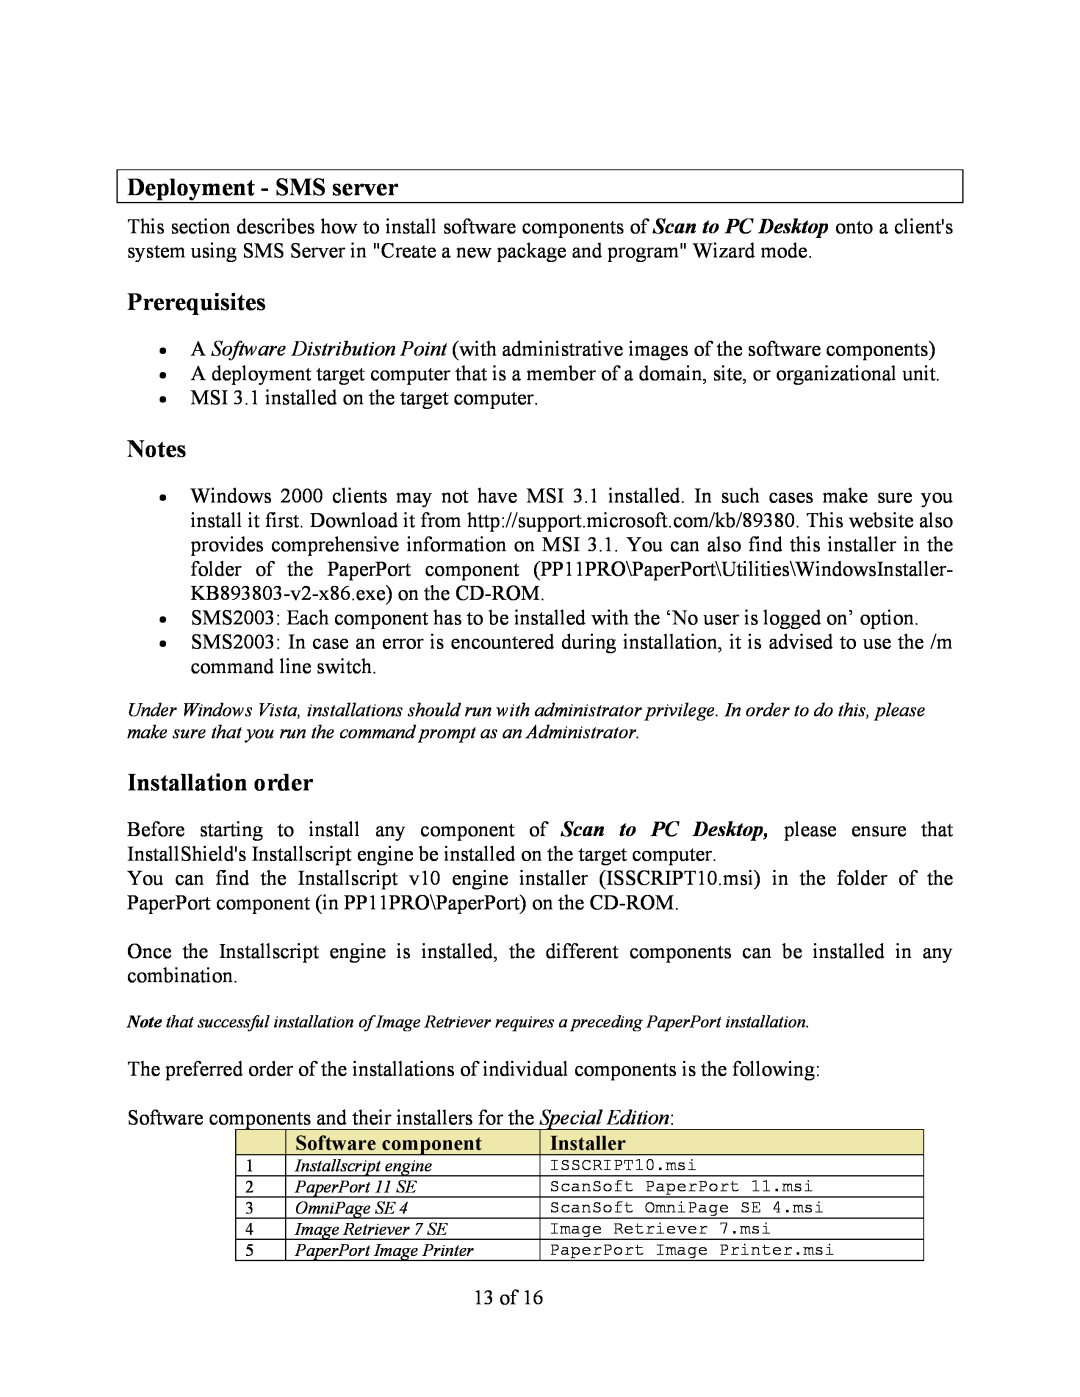 Xerox V9.0 manual Deployment - SMS server, Prerequisites, Installation order 